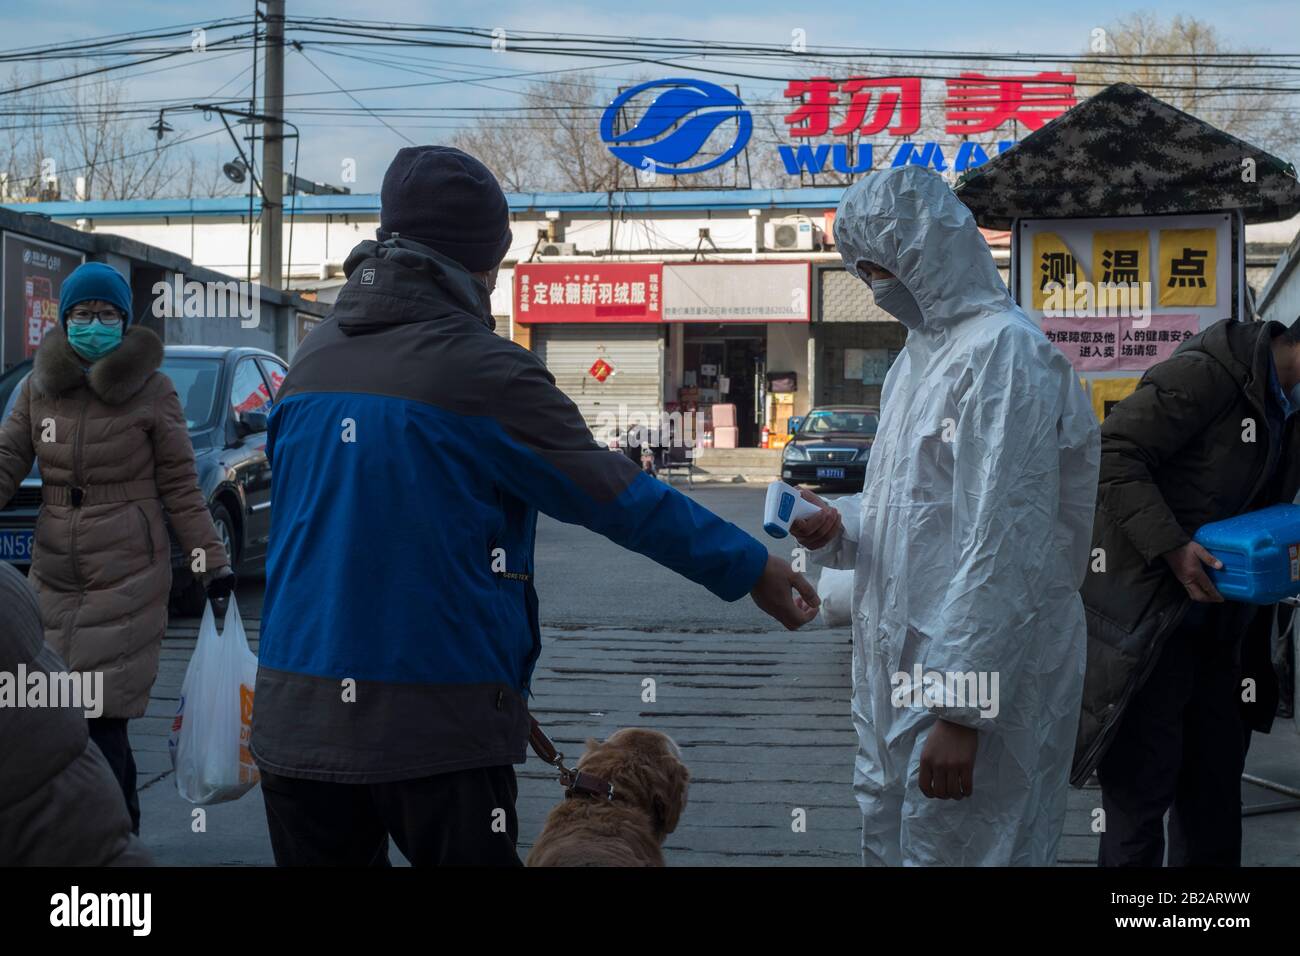 China battles deadly coronavirus outbreak. Stock Photo